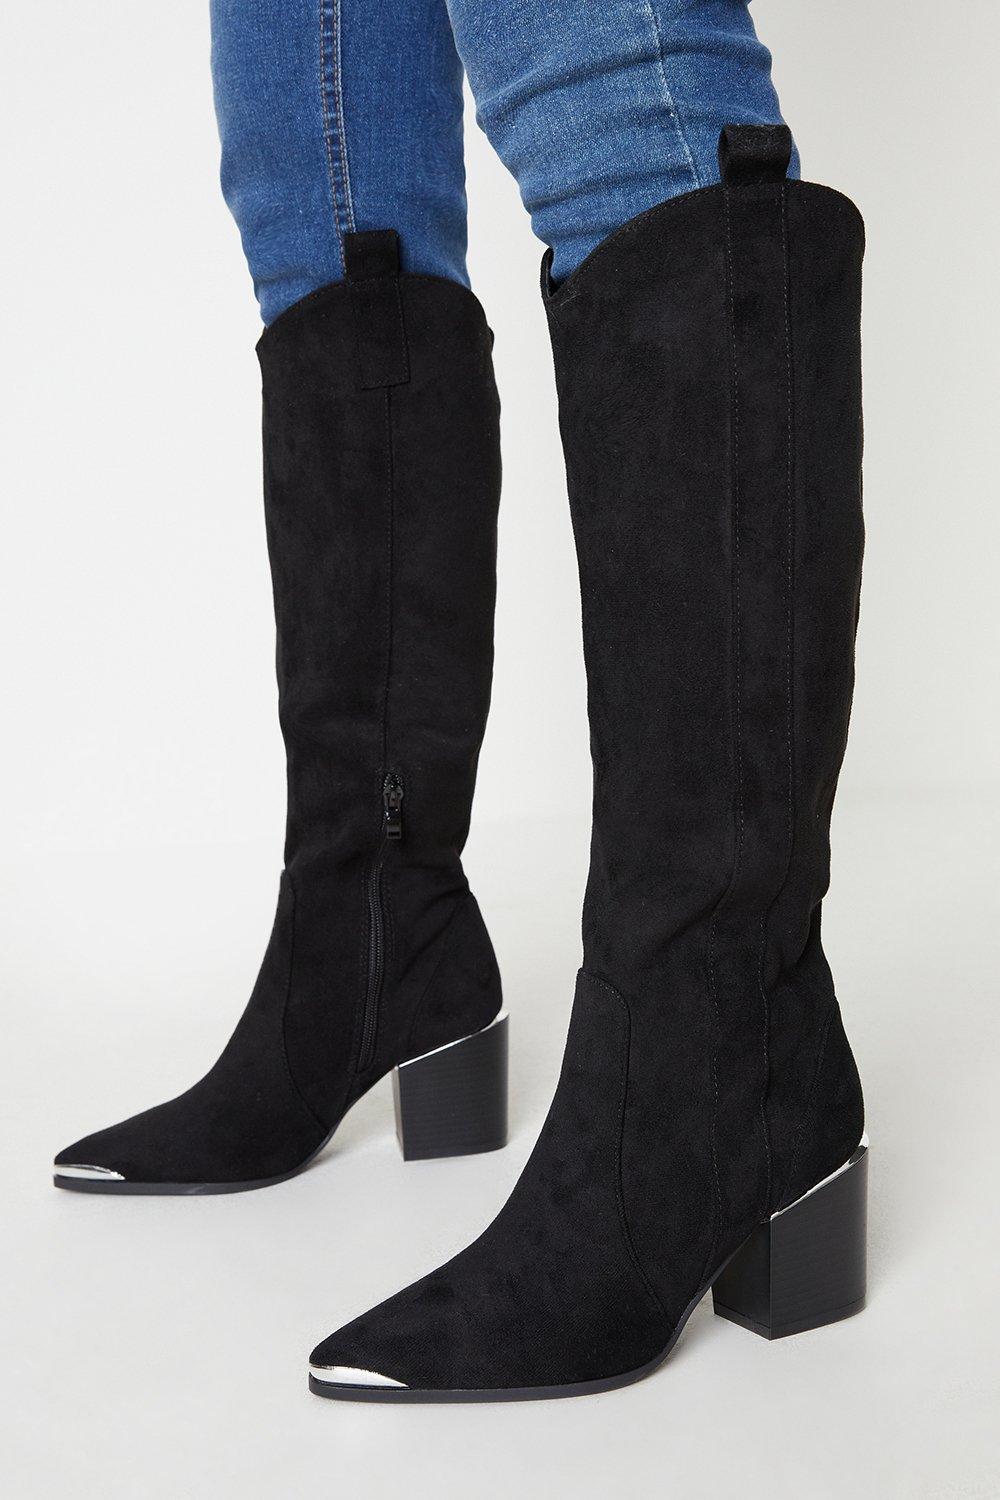 Women’s Konka Toe Cap Knee High Boots - black - 4